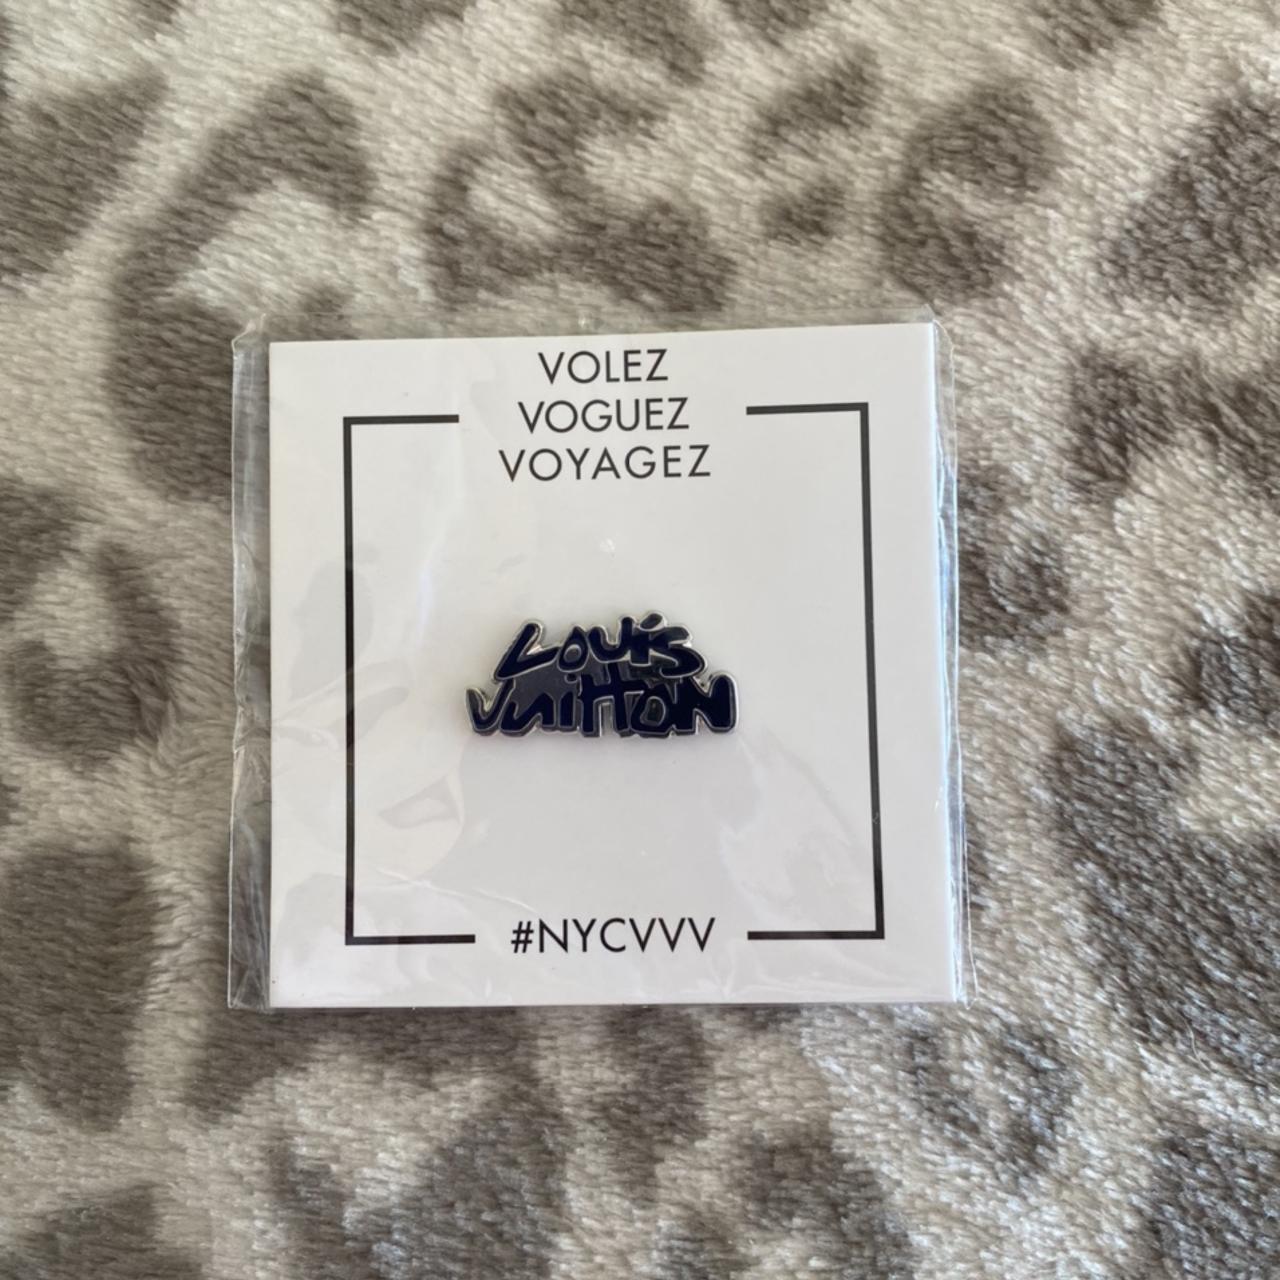 Louis Vuitton truck pin/brooche coin for size - Depop